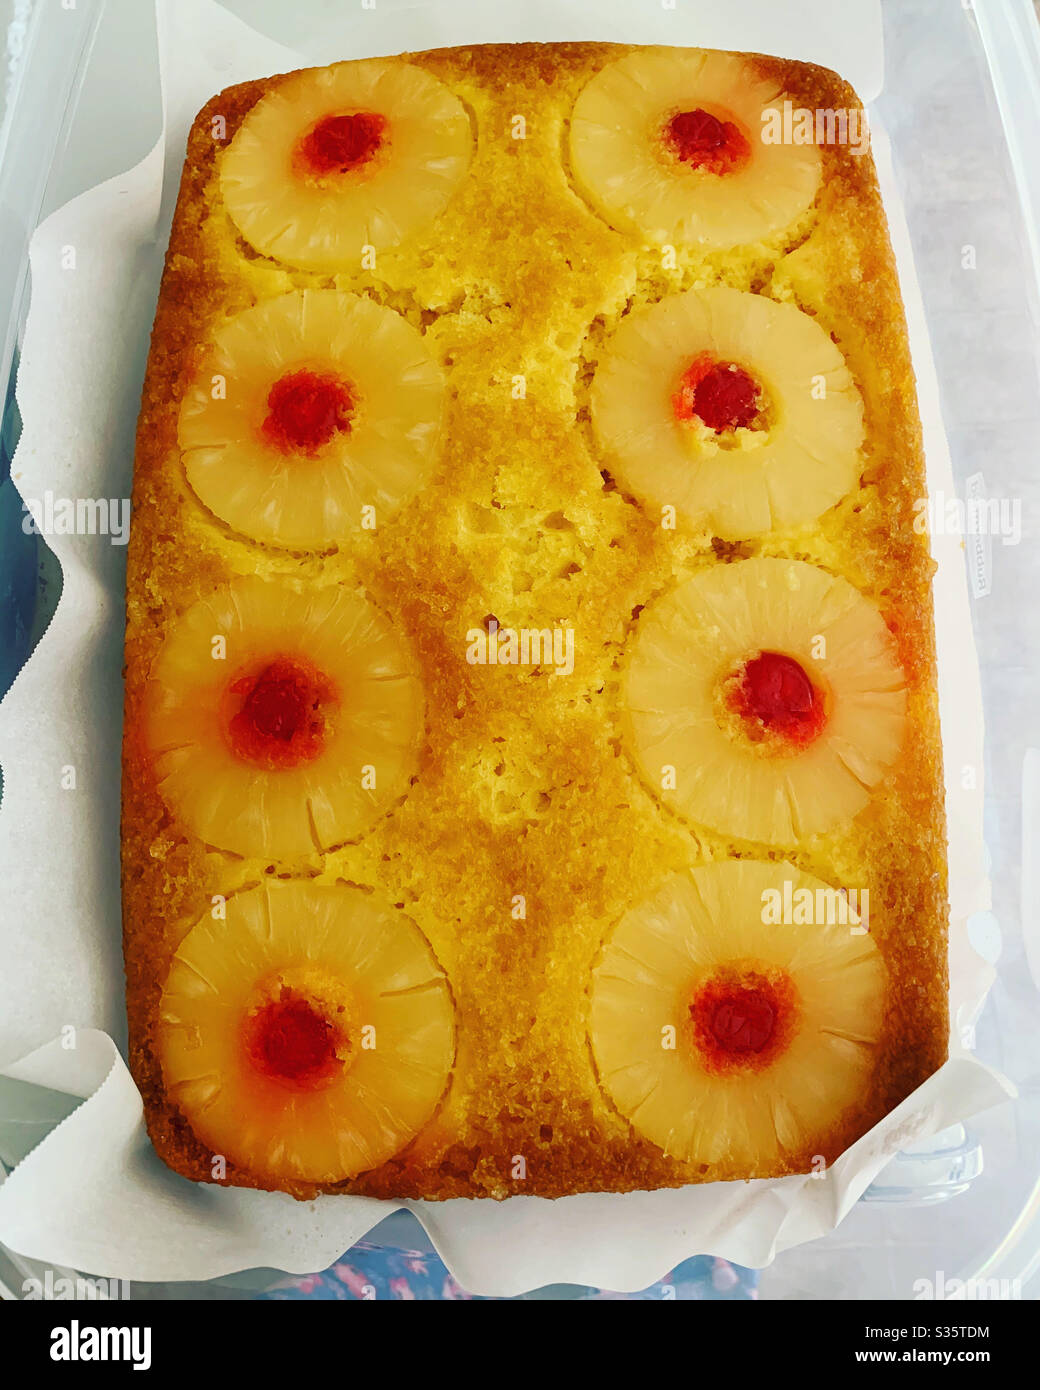 Homemade pineapple upside down cake. Pineapples and cherries. Stock Photo